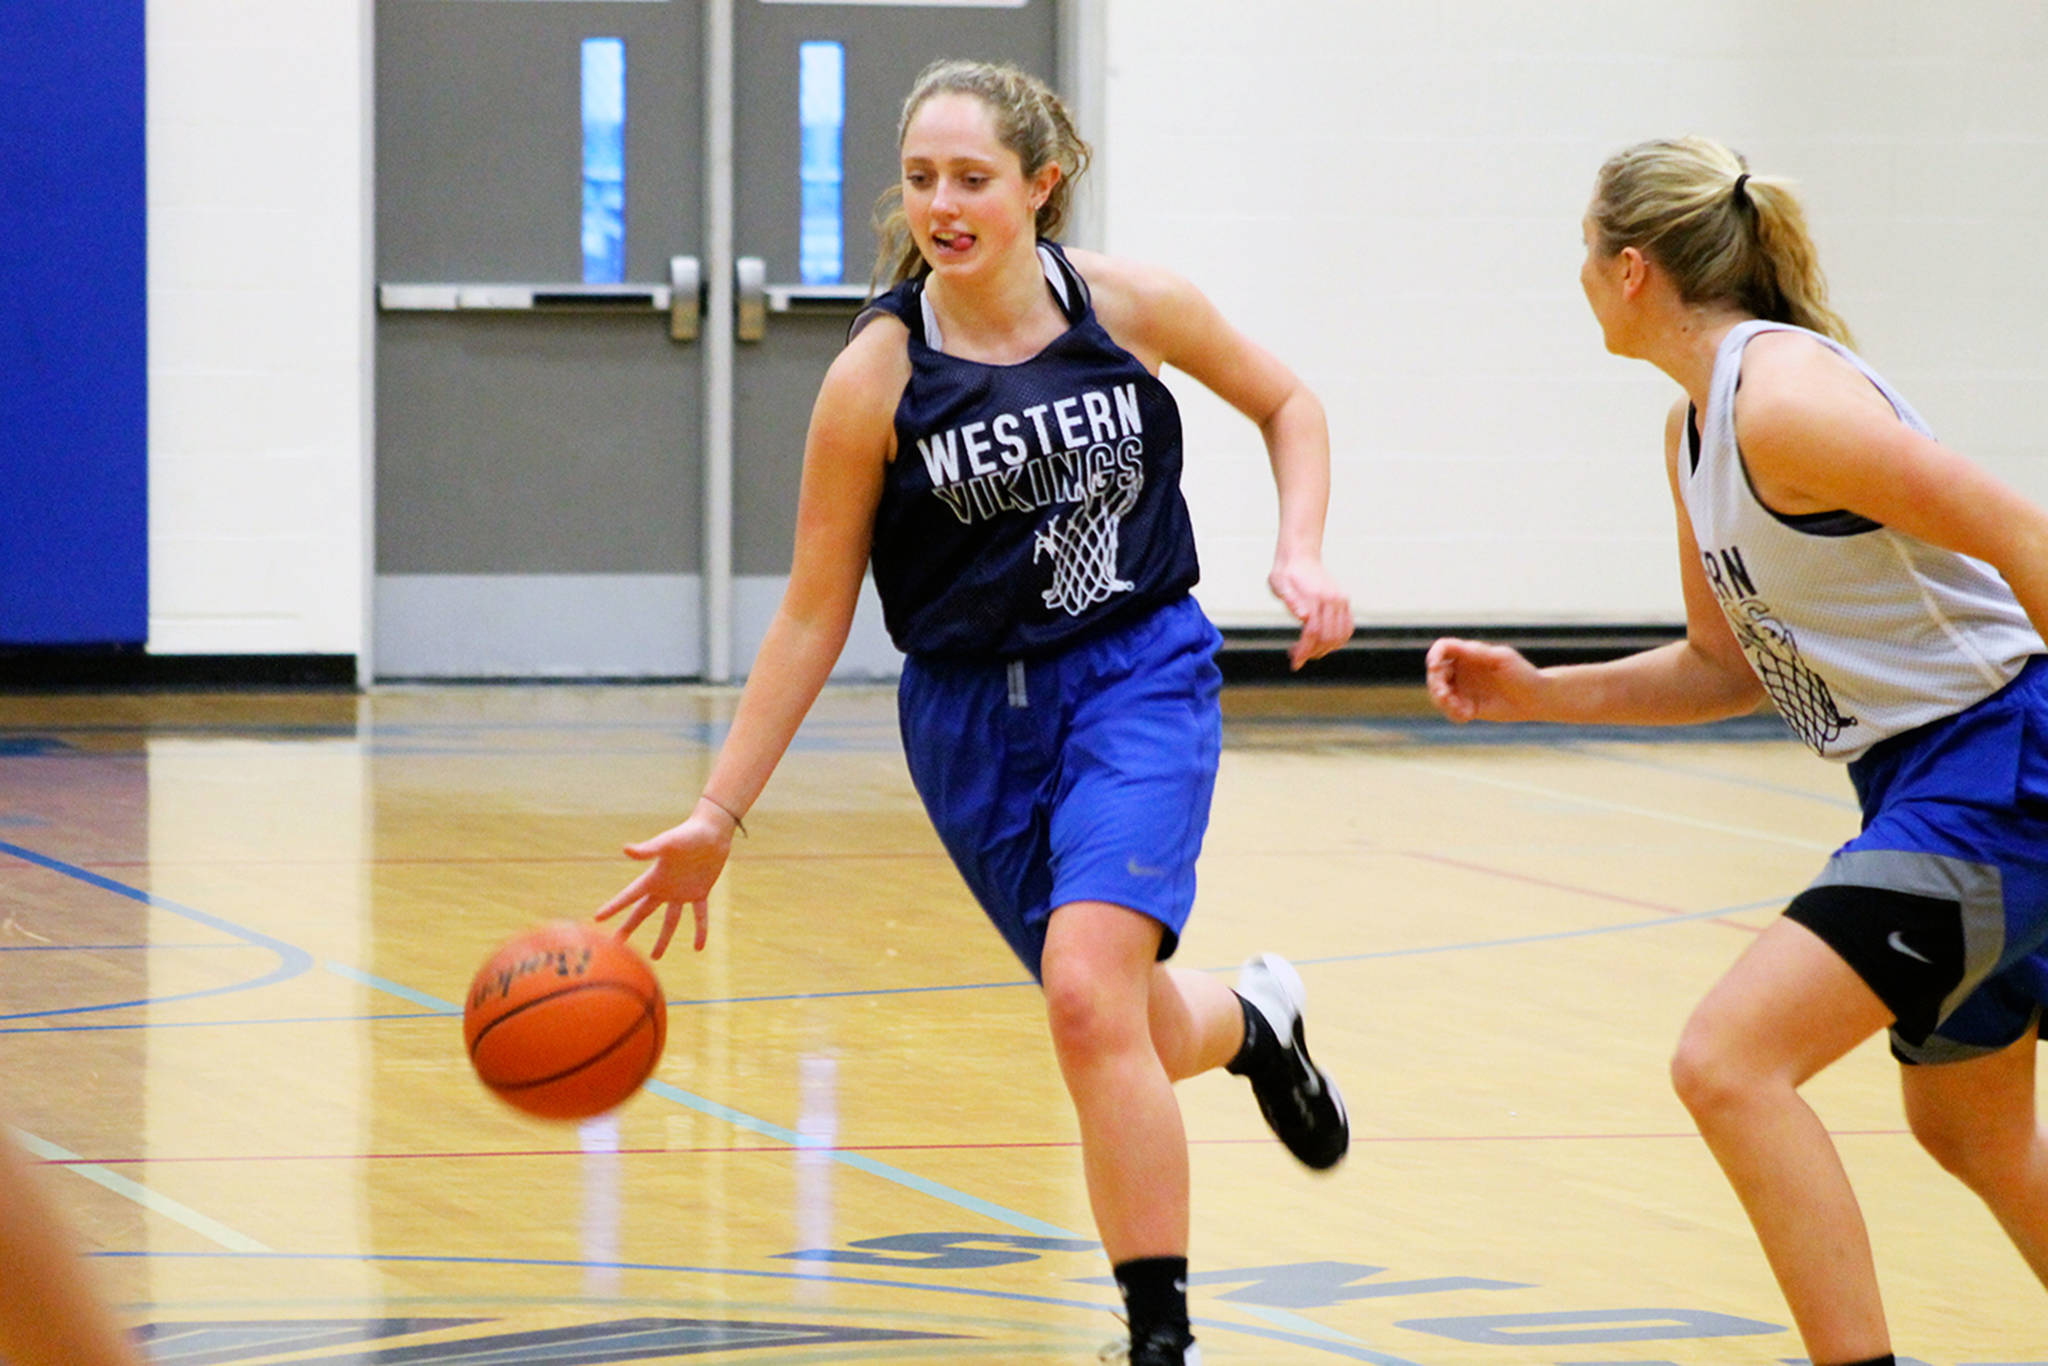 Girls basketball aims for postseason win with mix of veterans, underclassmen